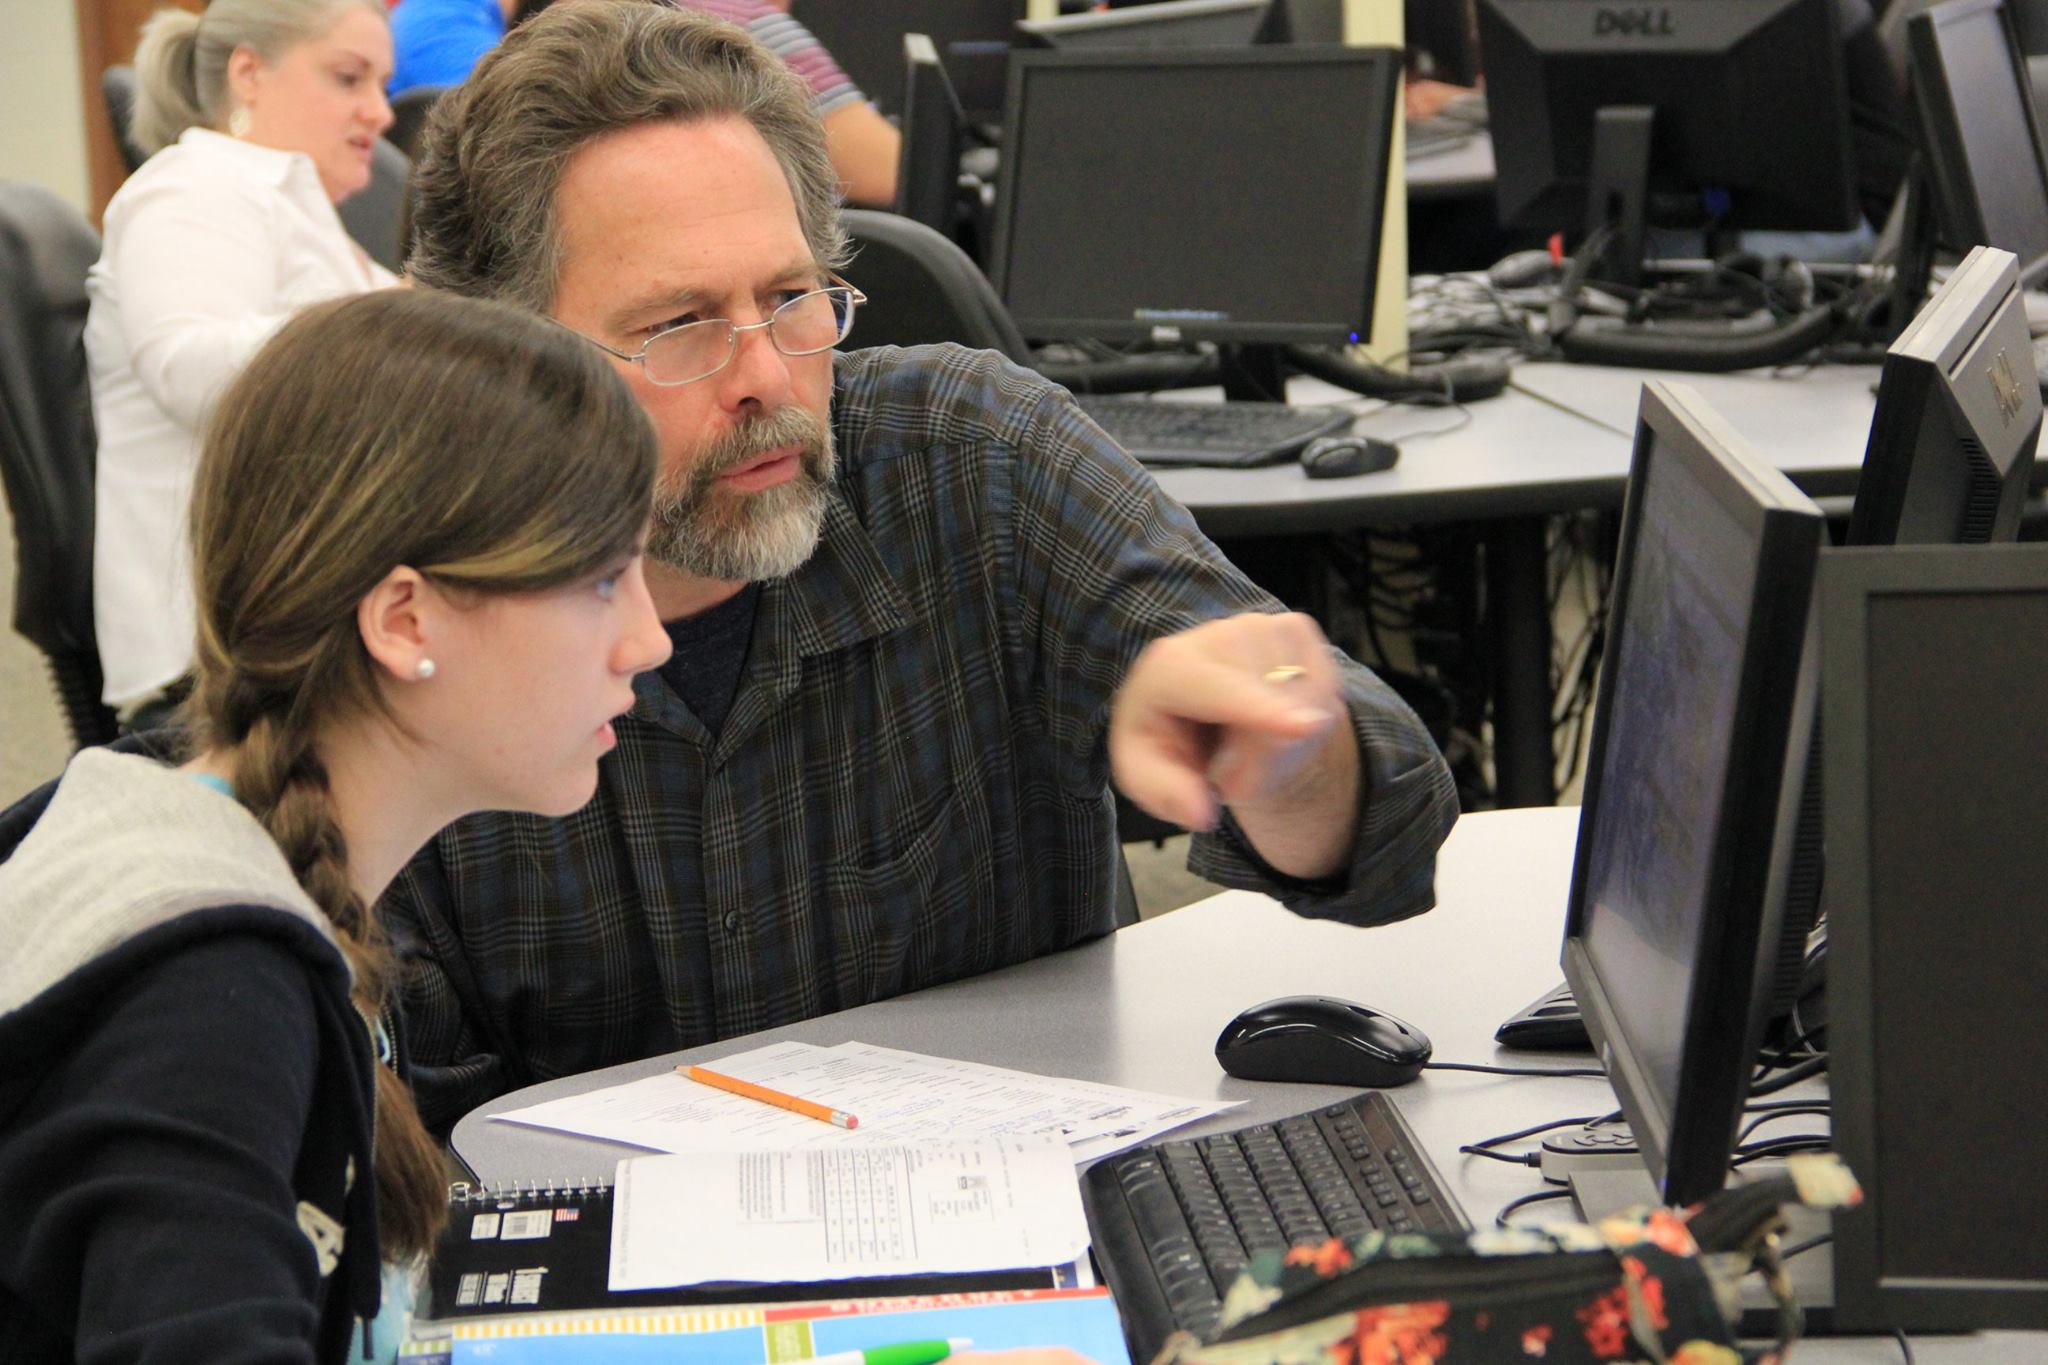 Professor Steve Cleberg advising a theatre student at a computer